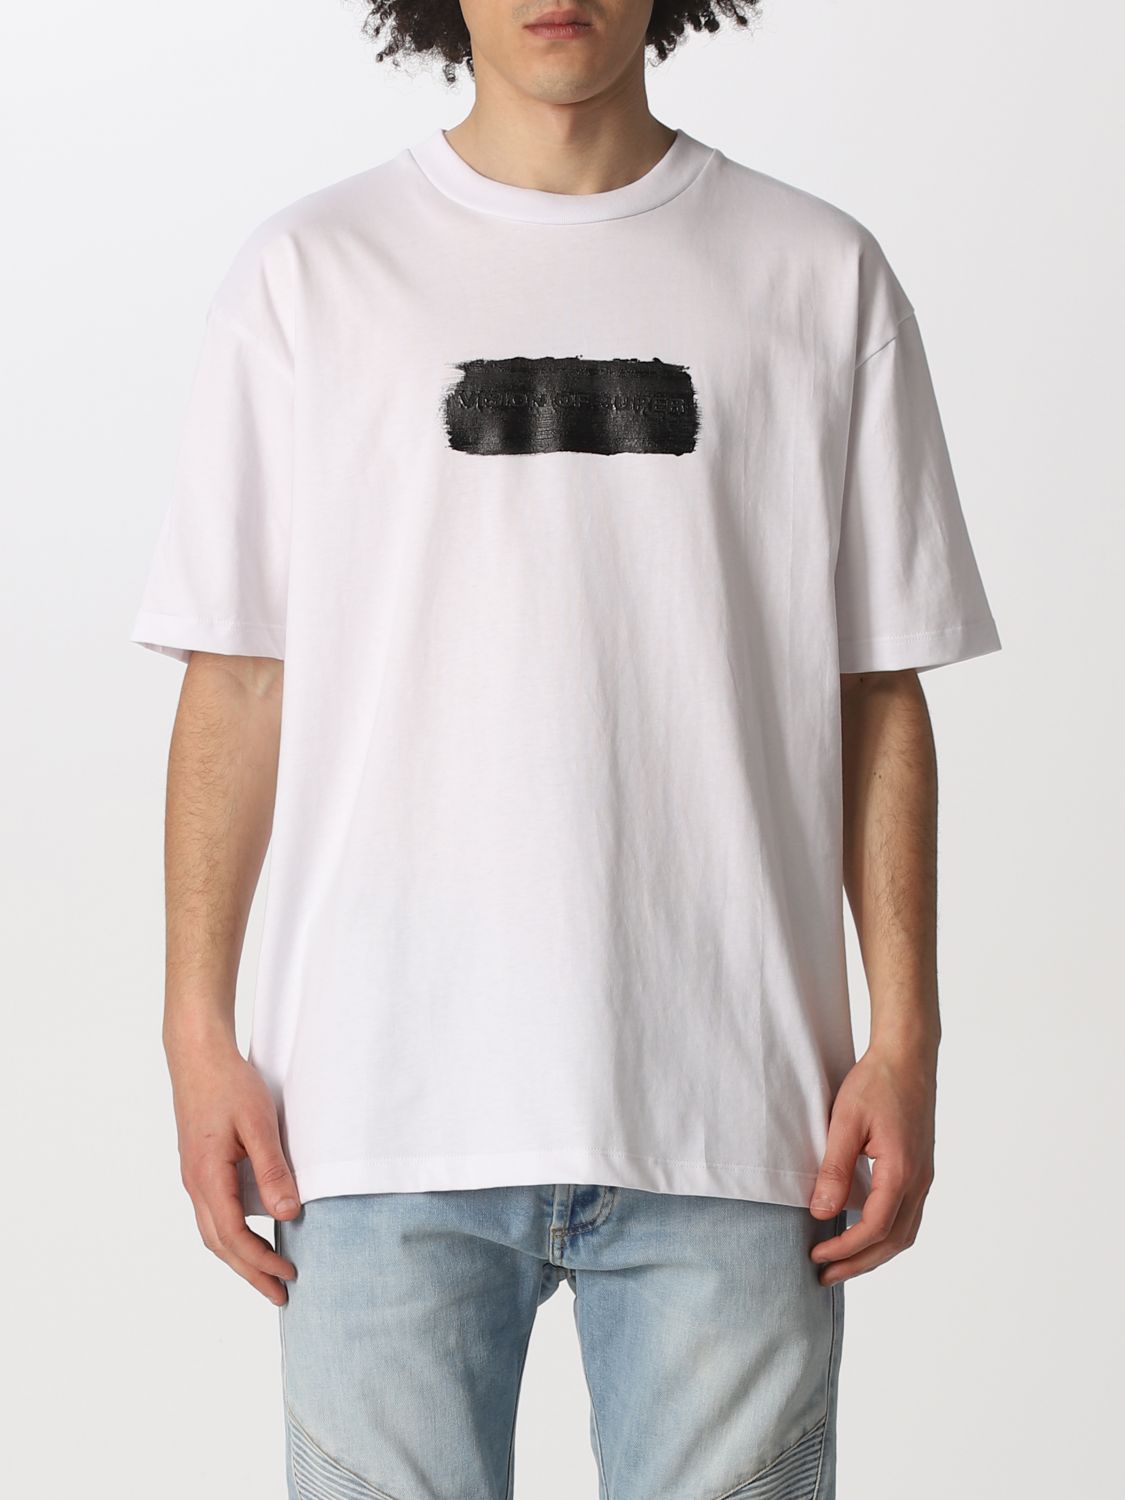 Tシャツ Vision Of Super: Tシャツ メンズ Vision Of Super ホワイト 1